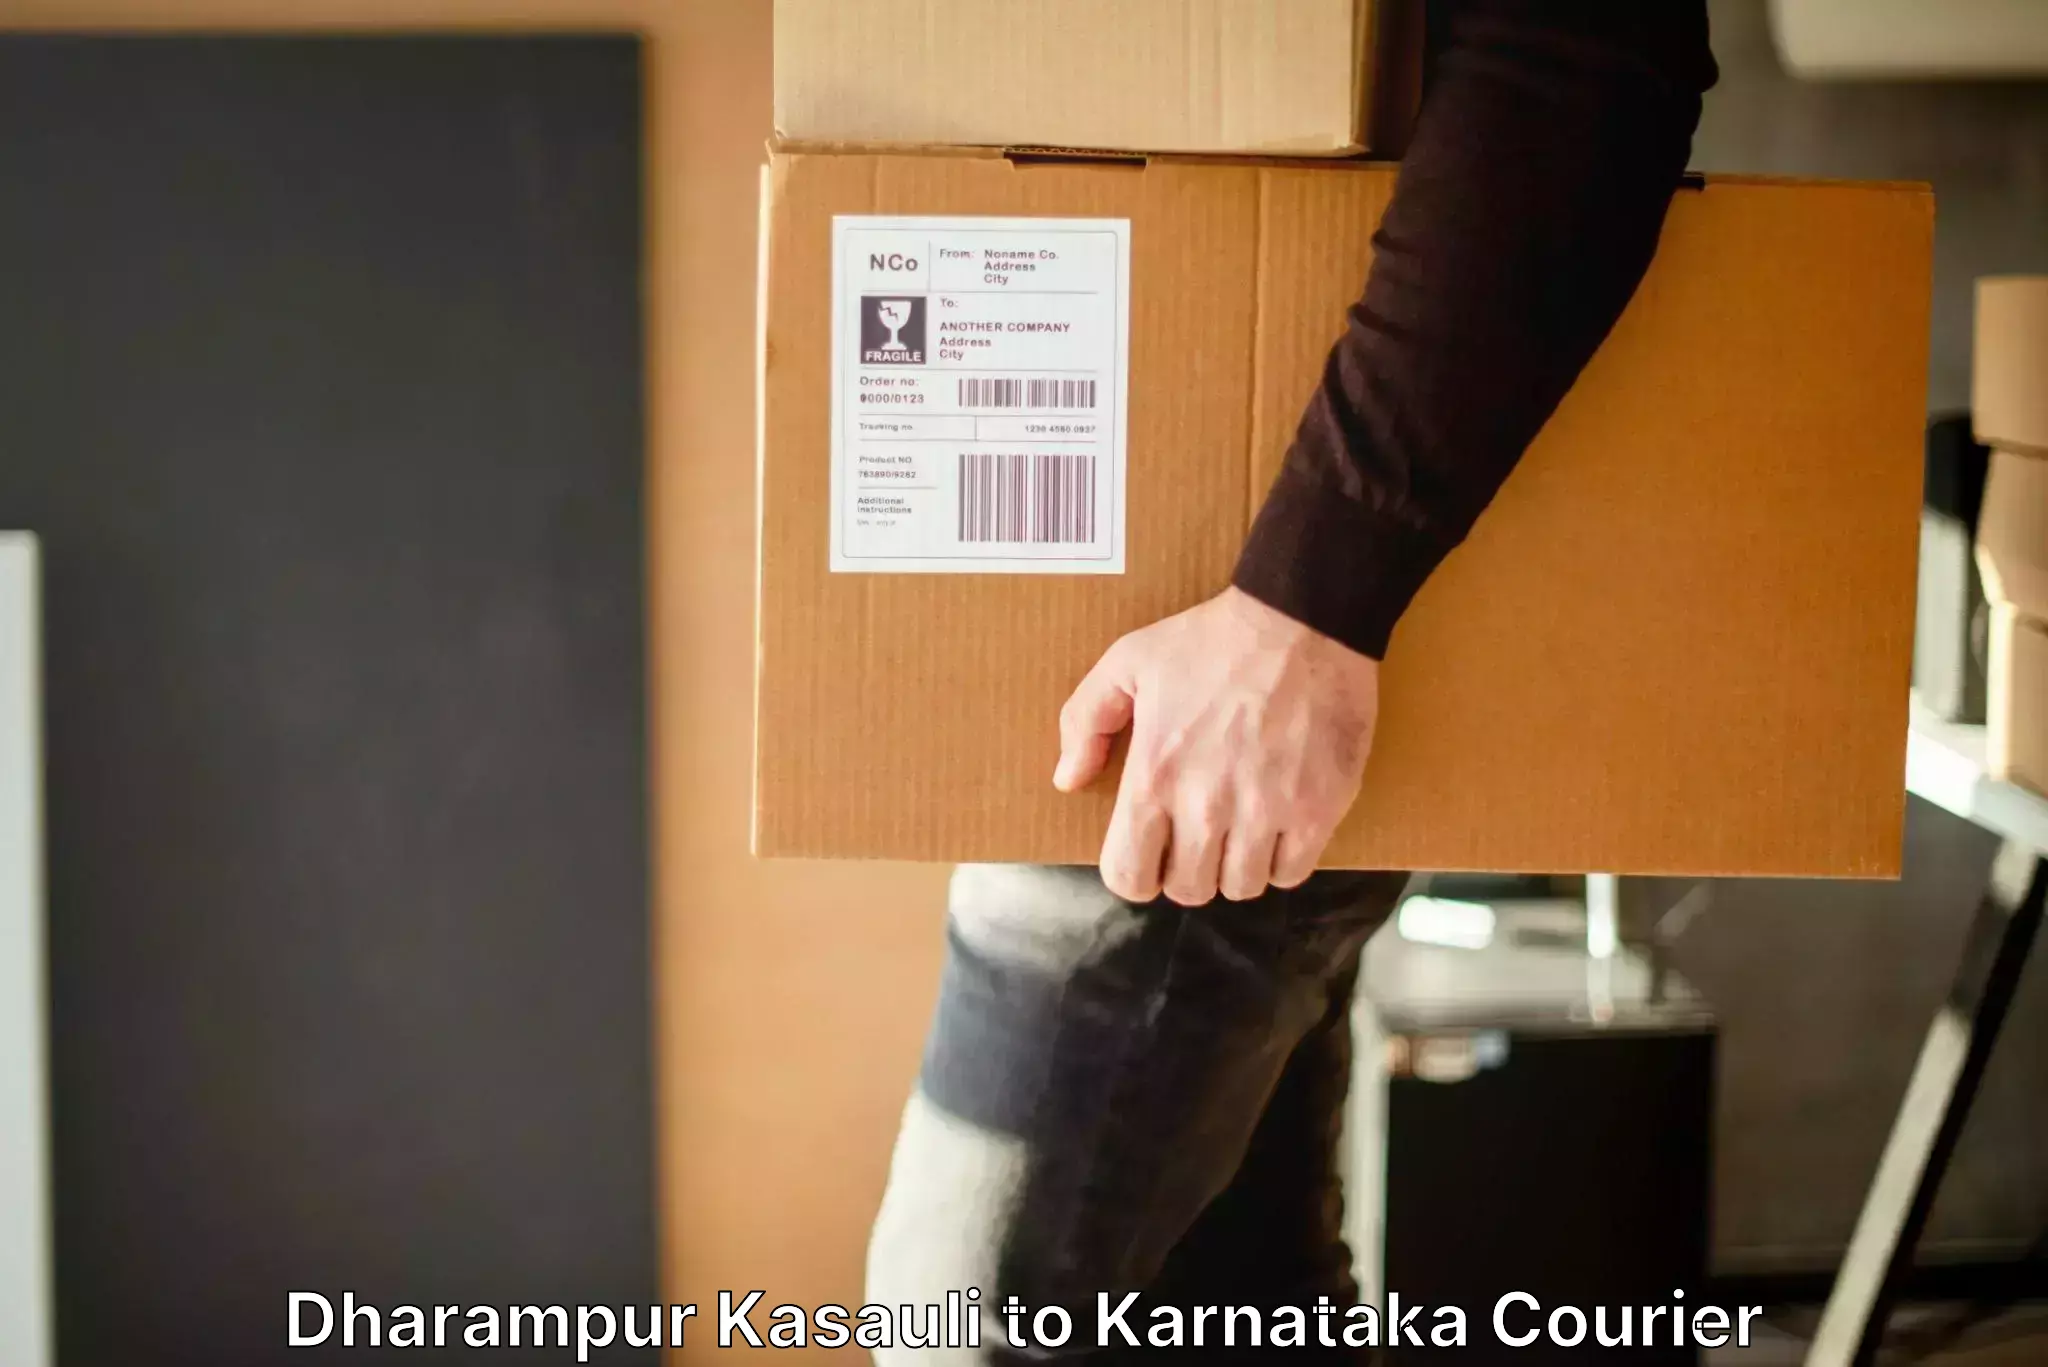 Baggage shipping service Dharampur Kasauli to Karnataka